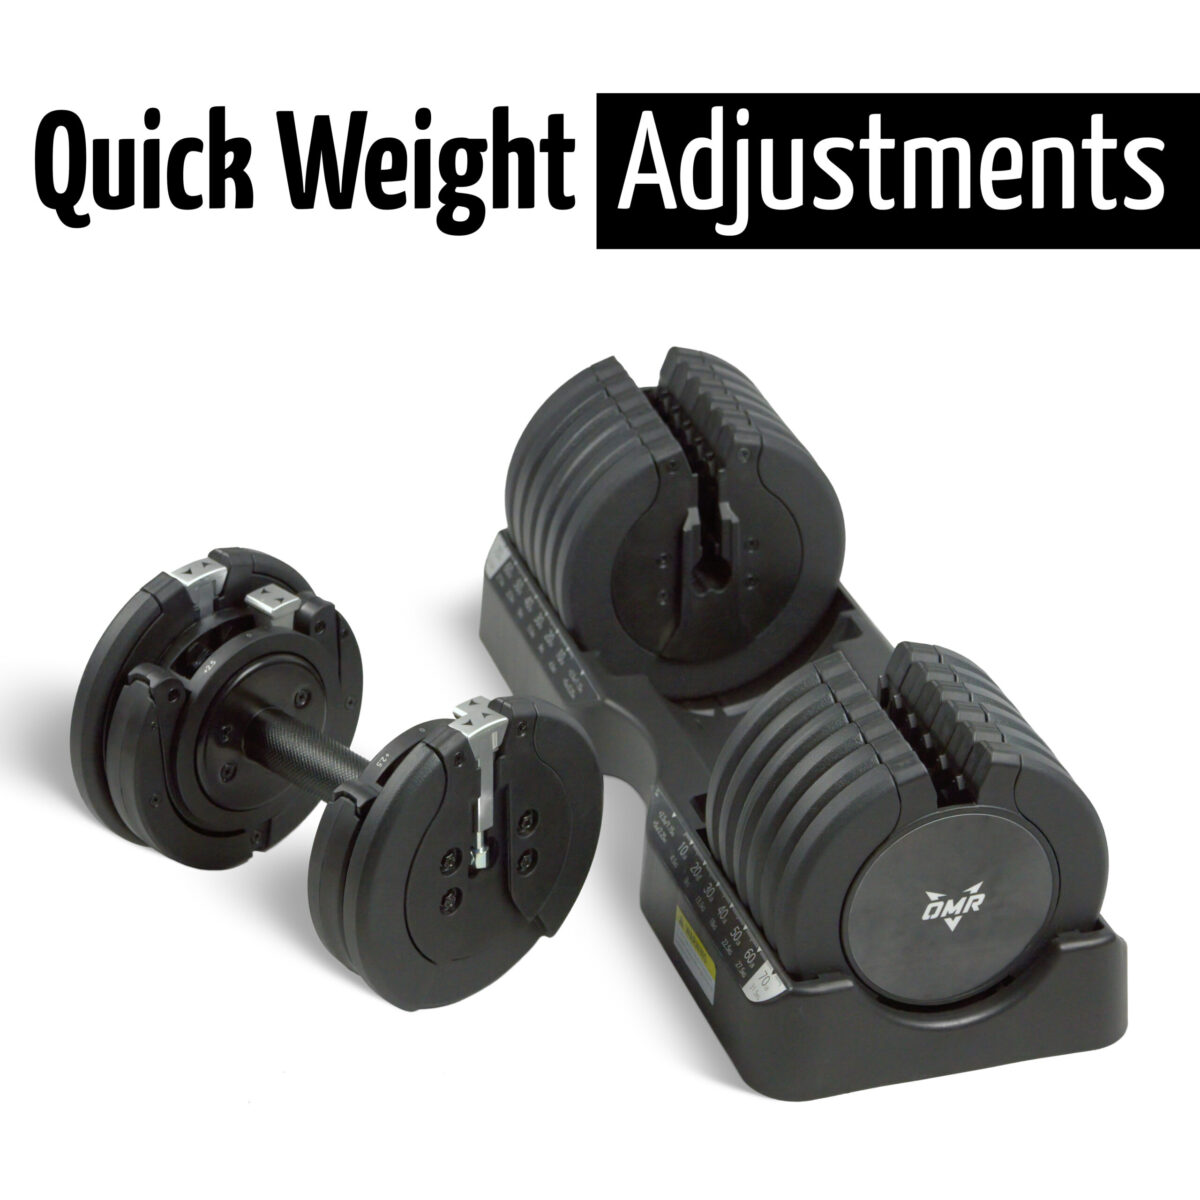 Quick Weight Adjustments 2 Edit